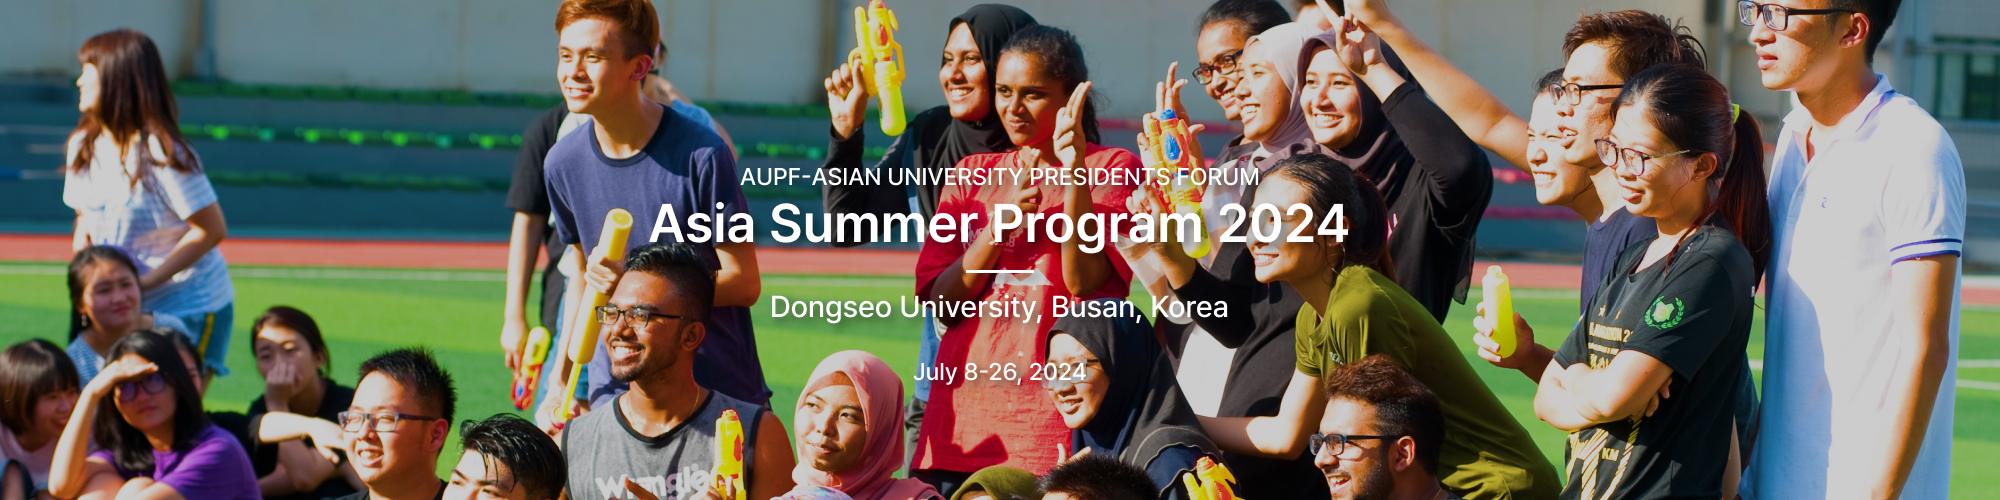 AUPF - Asian University presidents Forum Asia Summer Program 2018 Dongseo University, Busan, Korea July 9-27, 2018